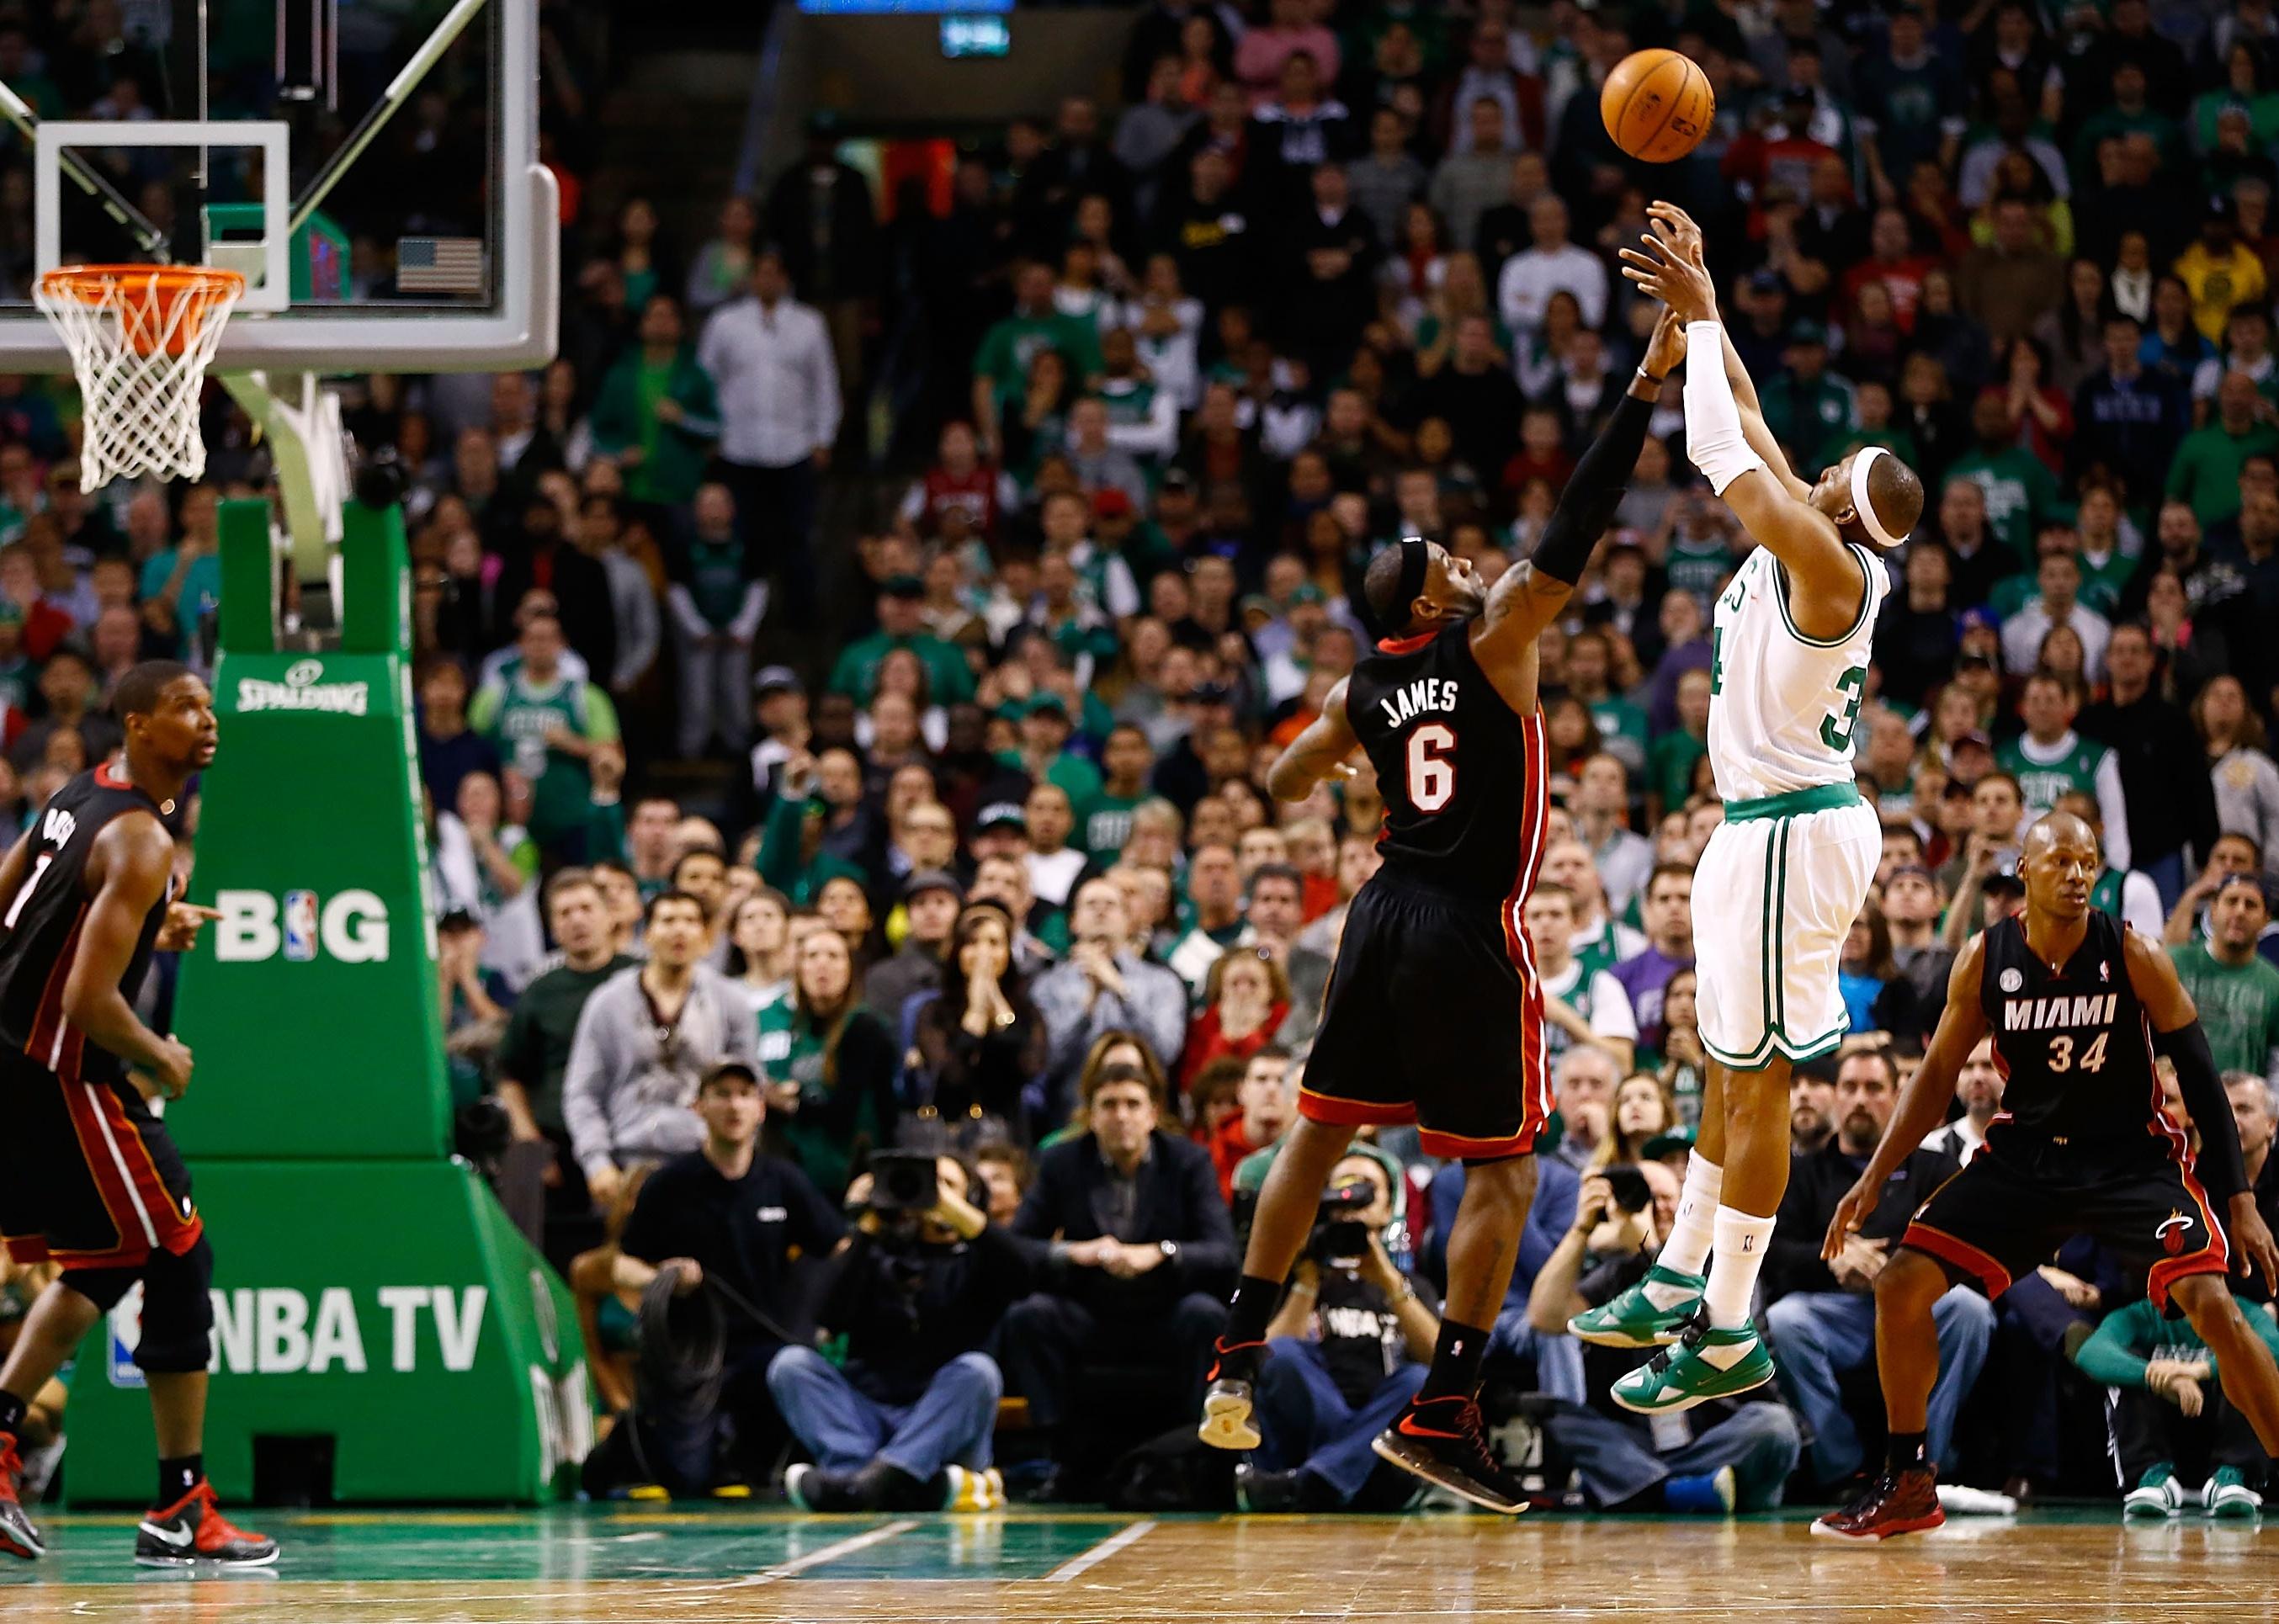 Paul Pierce #34 of the Boston Celtics takes a game-winning shot over LeBron James.